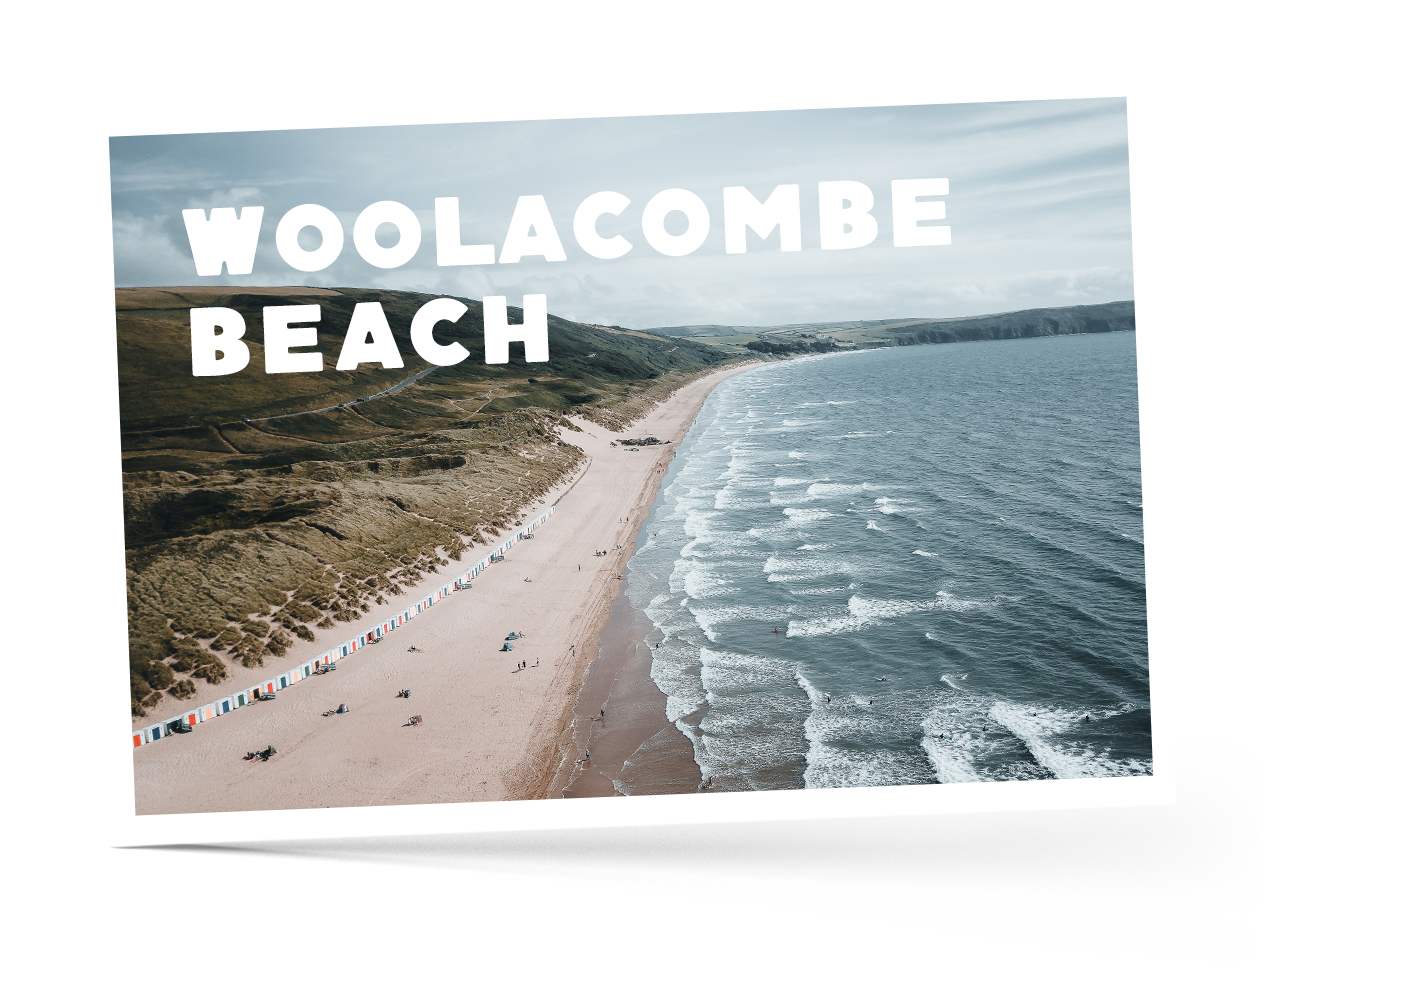 Sand dunes, a row of coloured beach huts along Woolacombe beach and deep blue sea